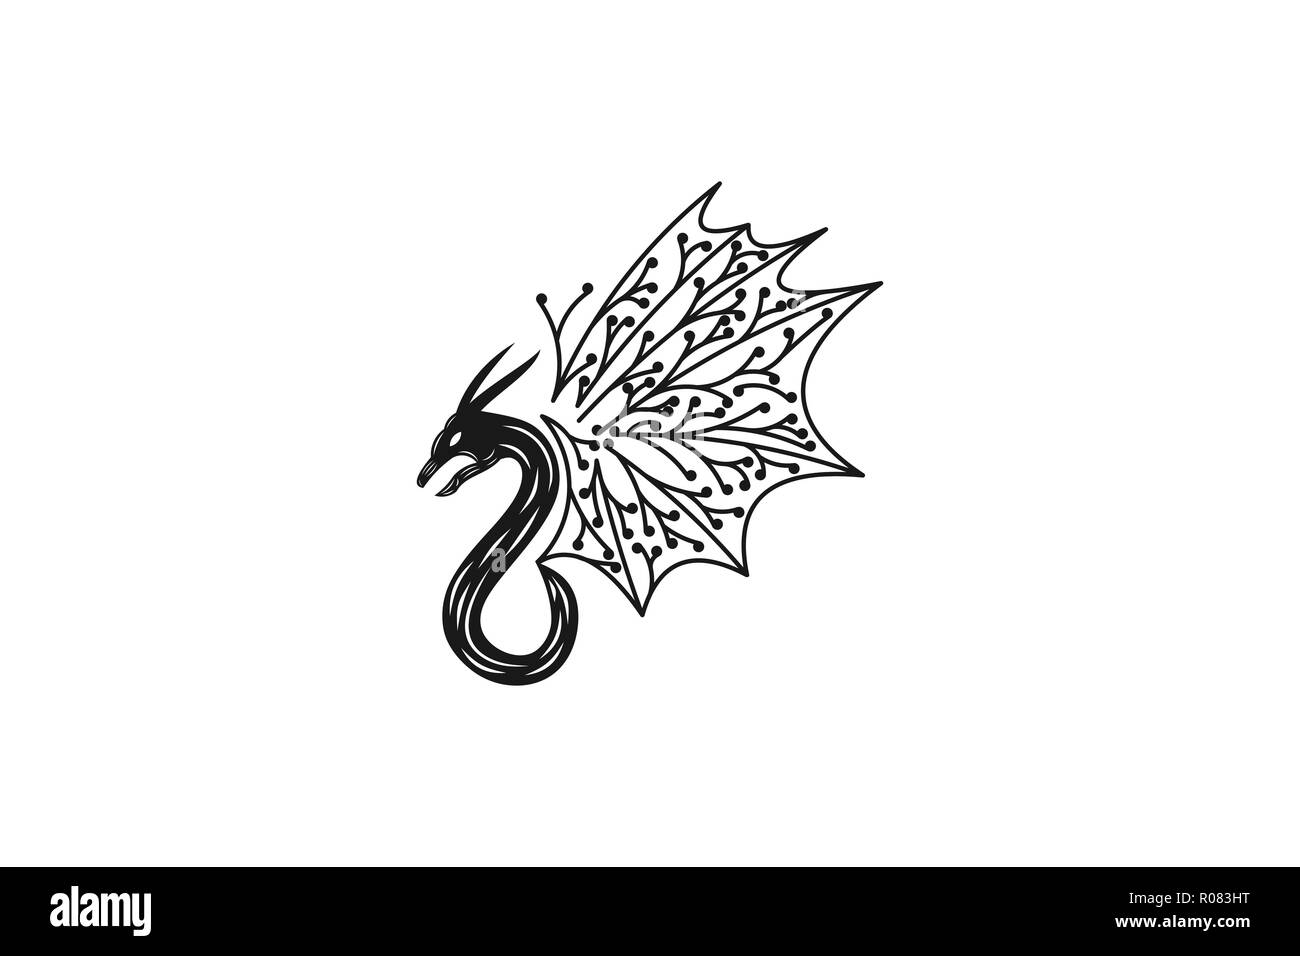 Dragons  pmtsketch  tattoodesign GmbH